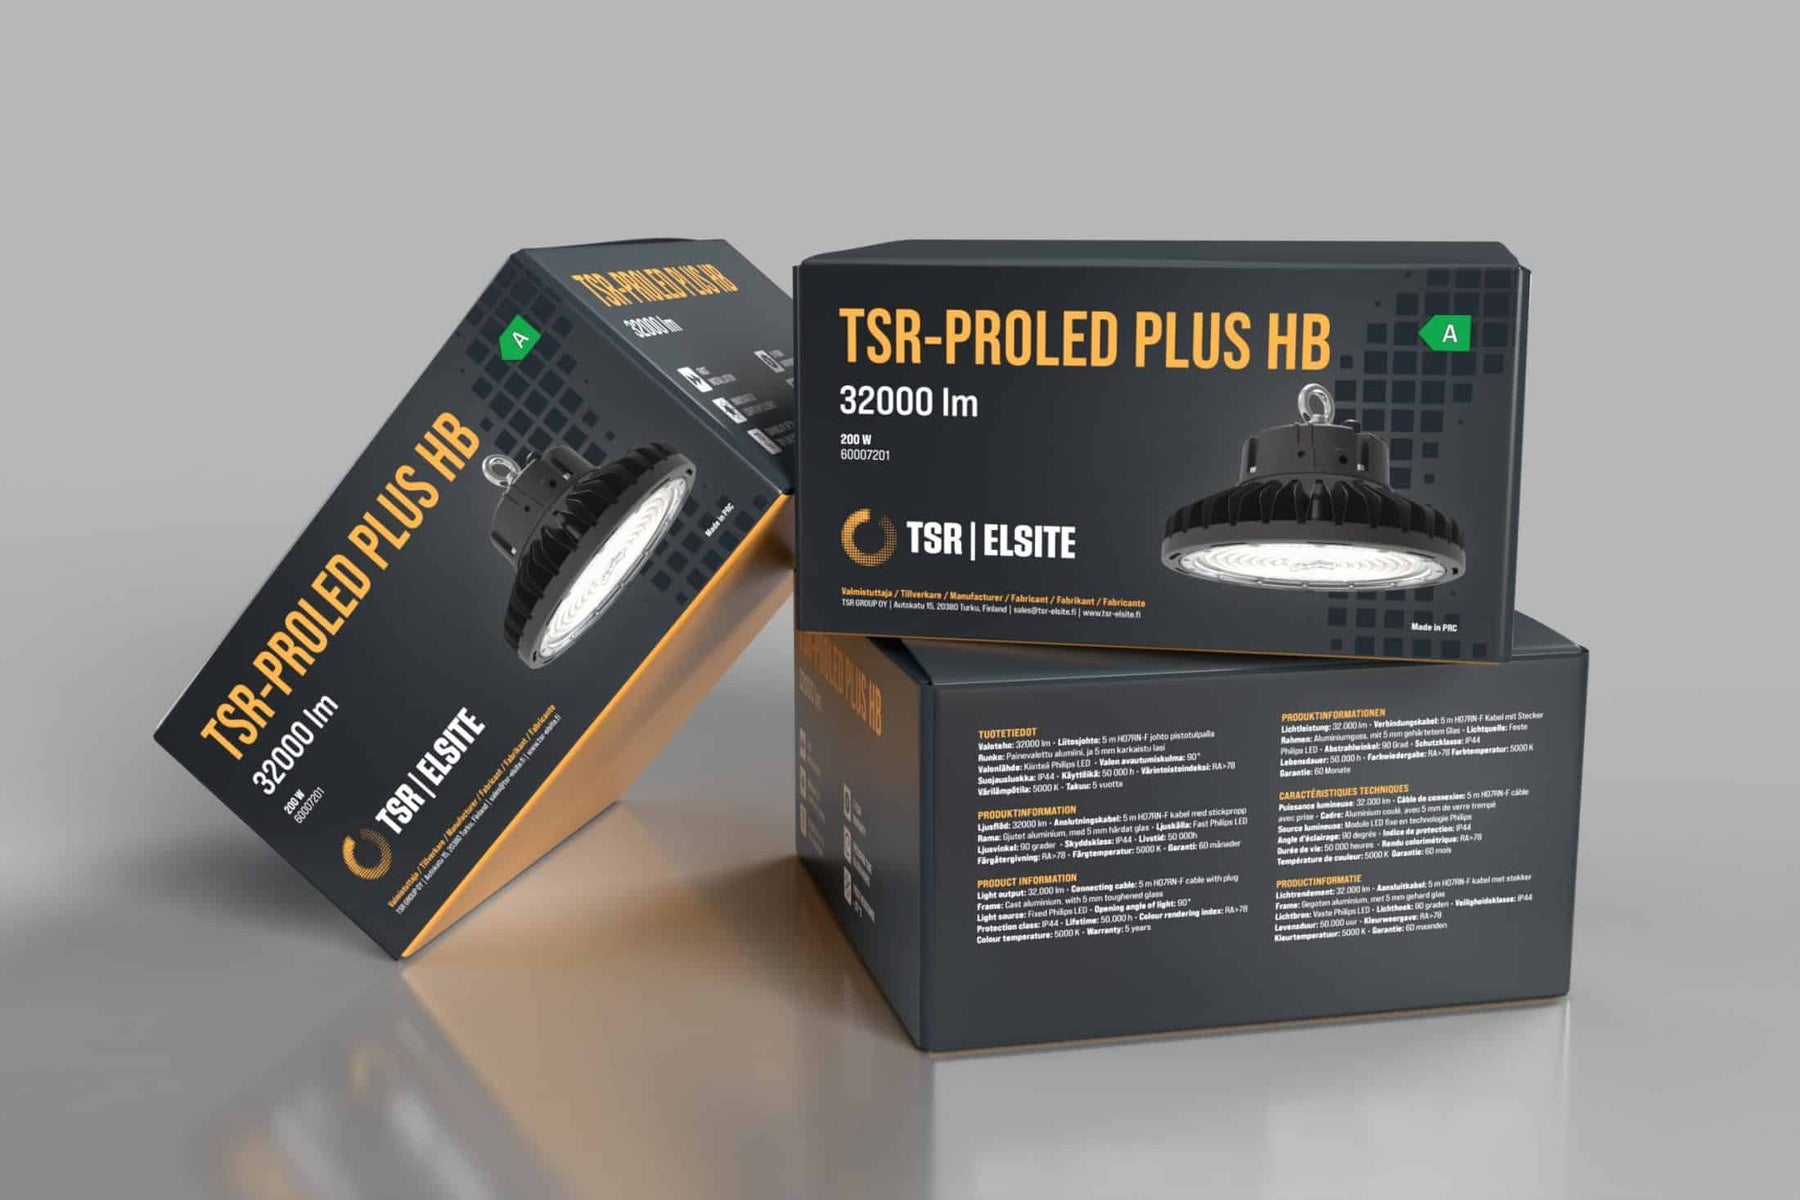 LED Armatur TSR-PROLED PLUS HB 32000 - High Bay